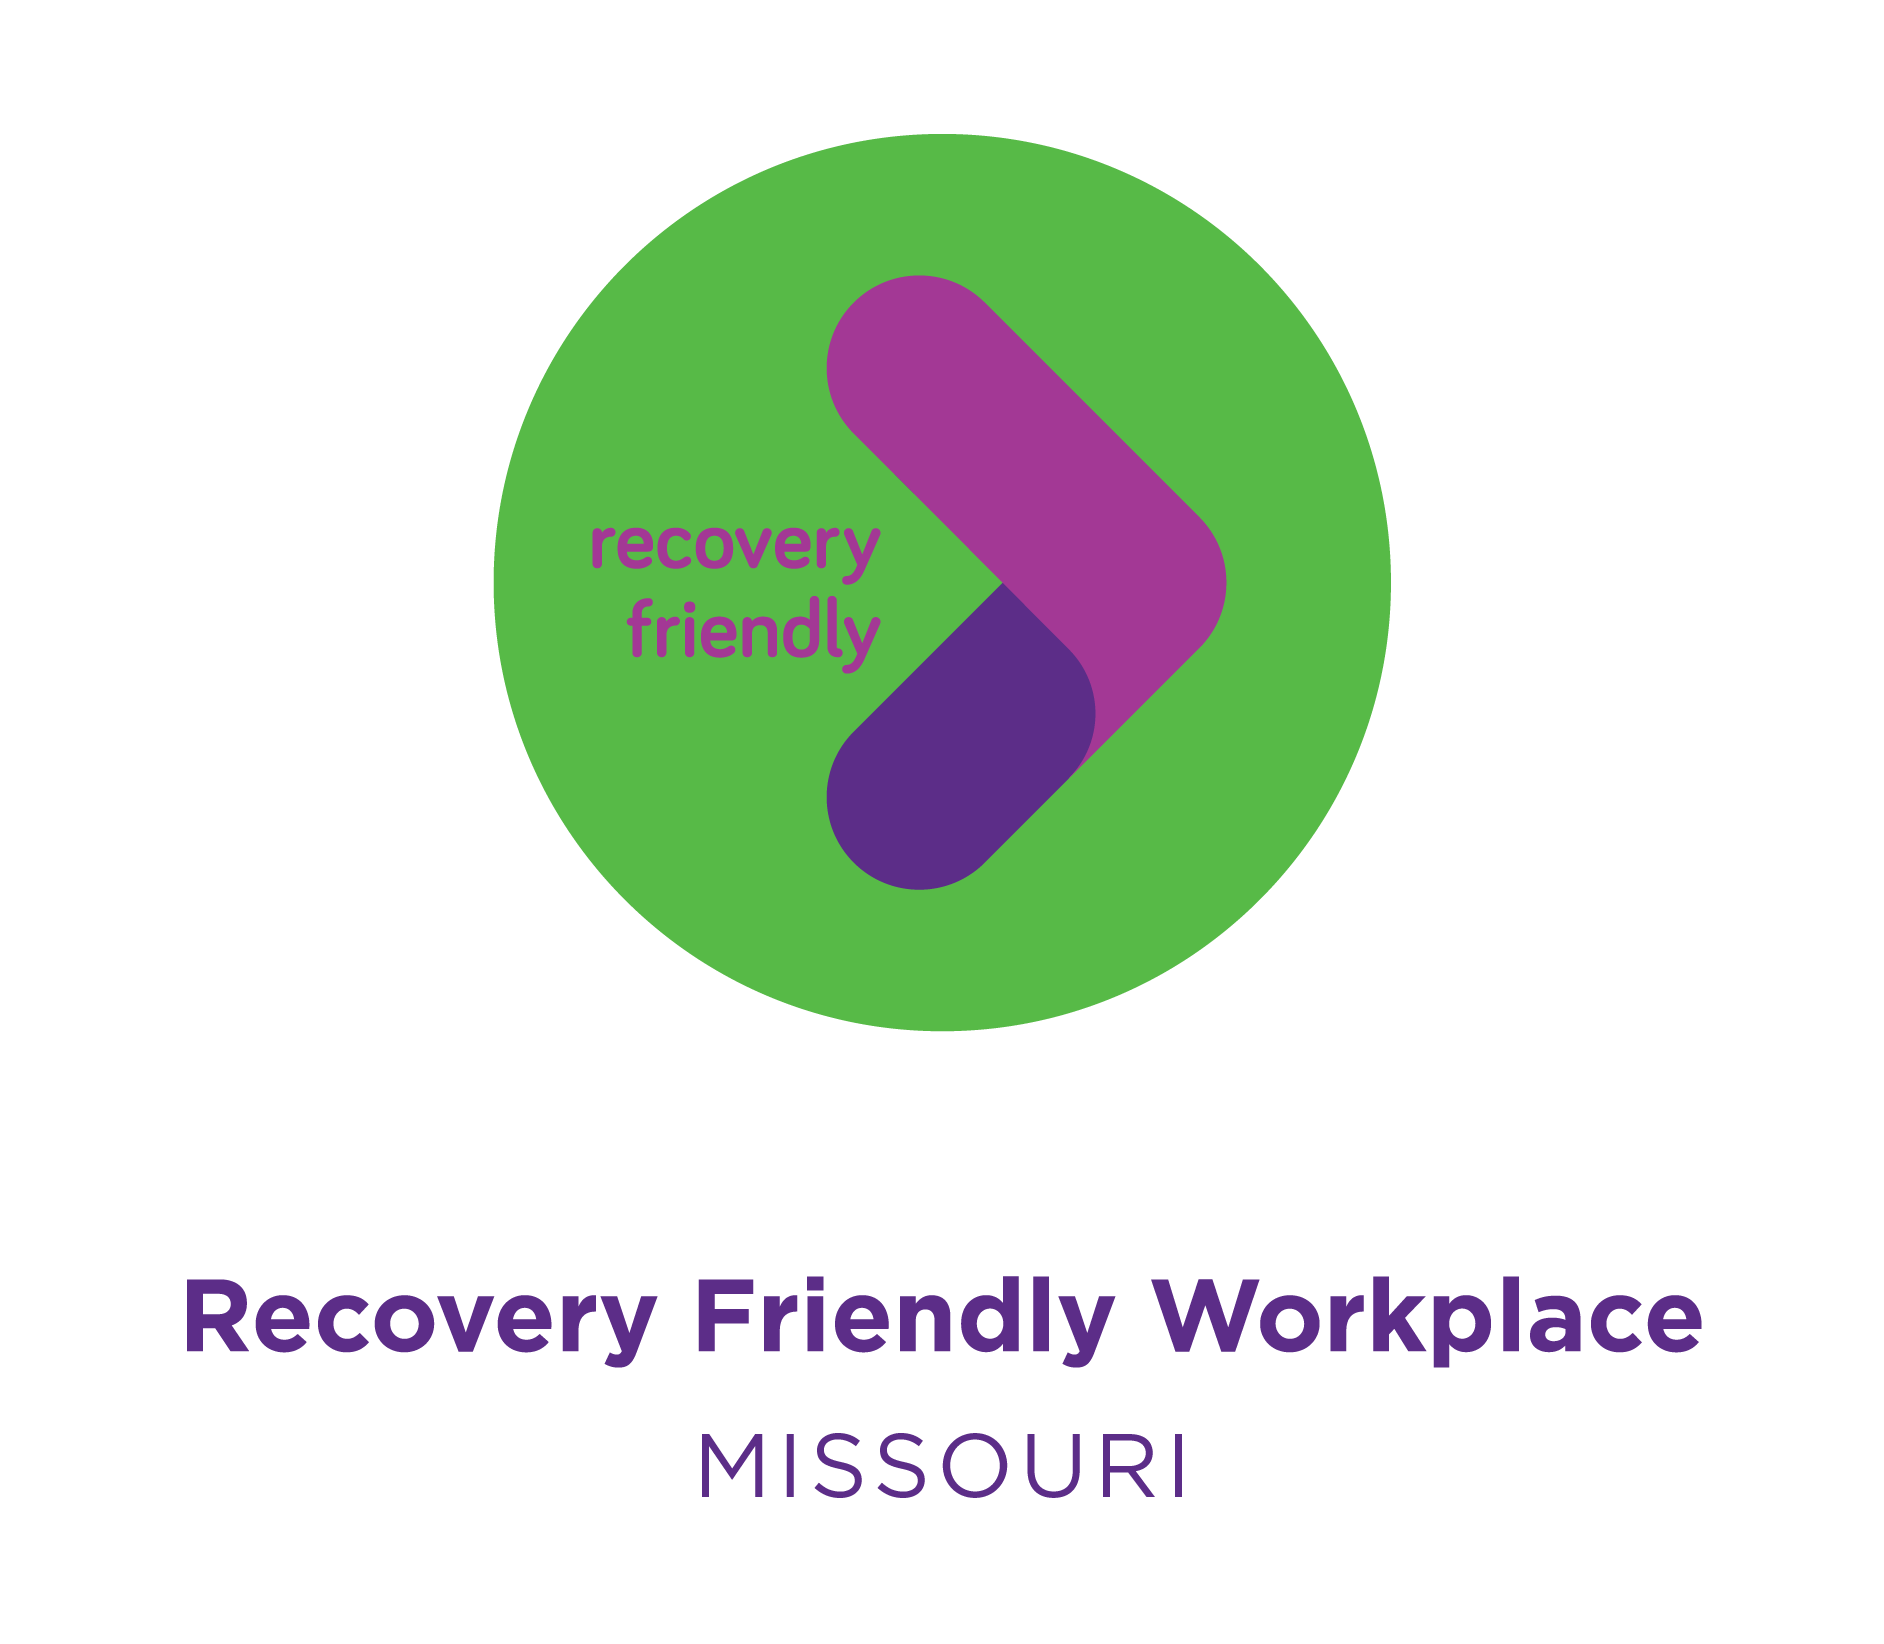 Recovery Friendly Workplace - Missouri